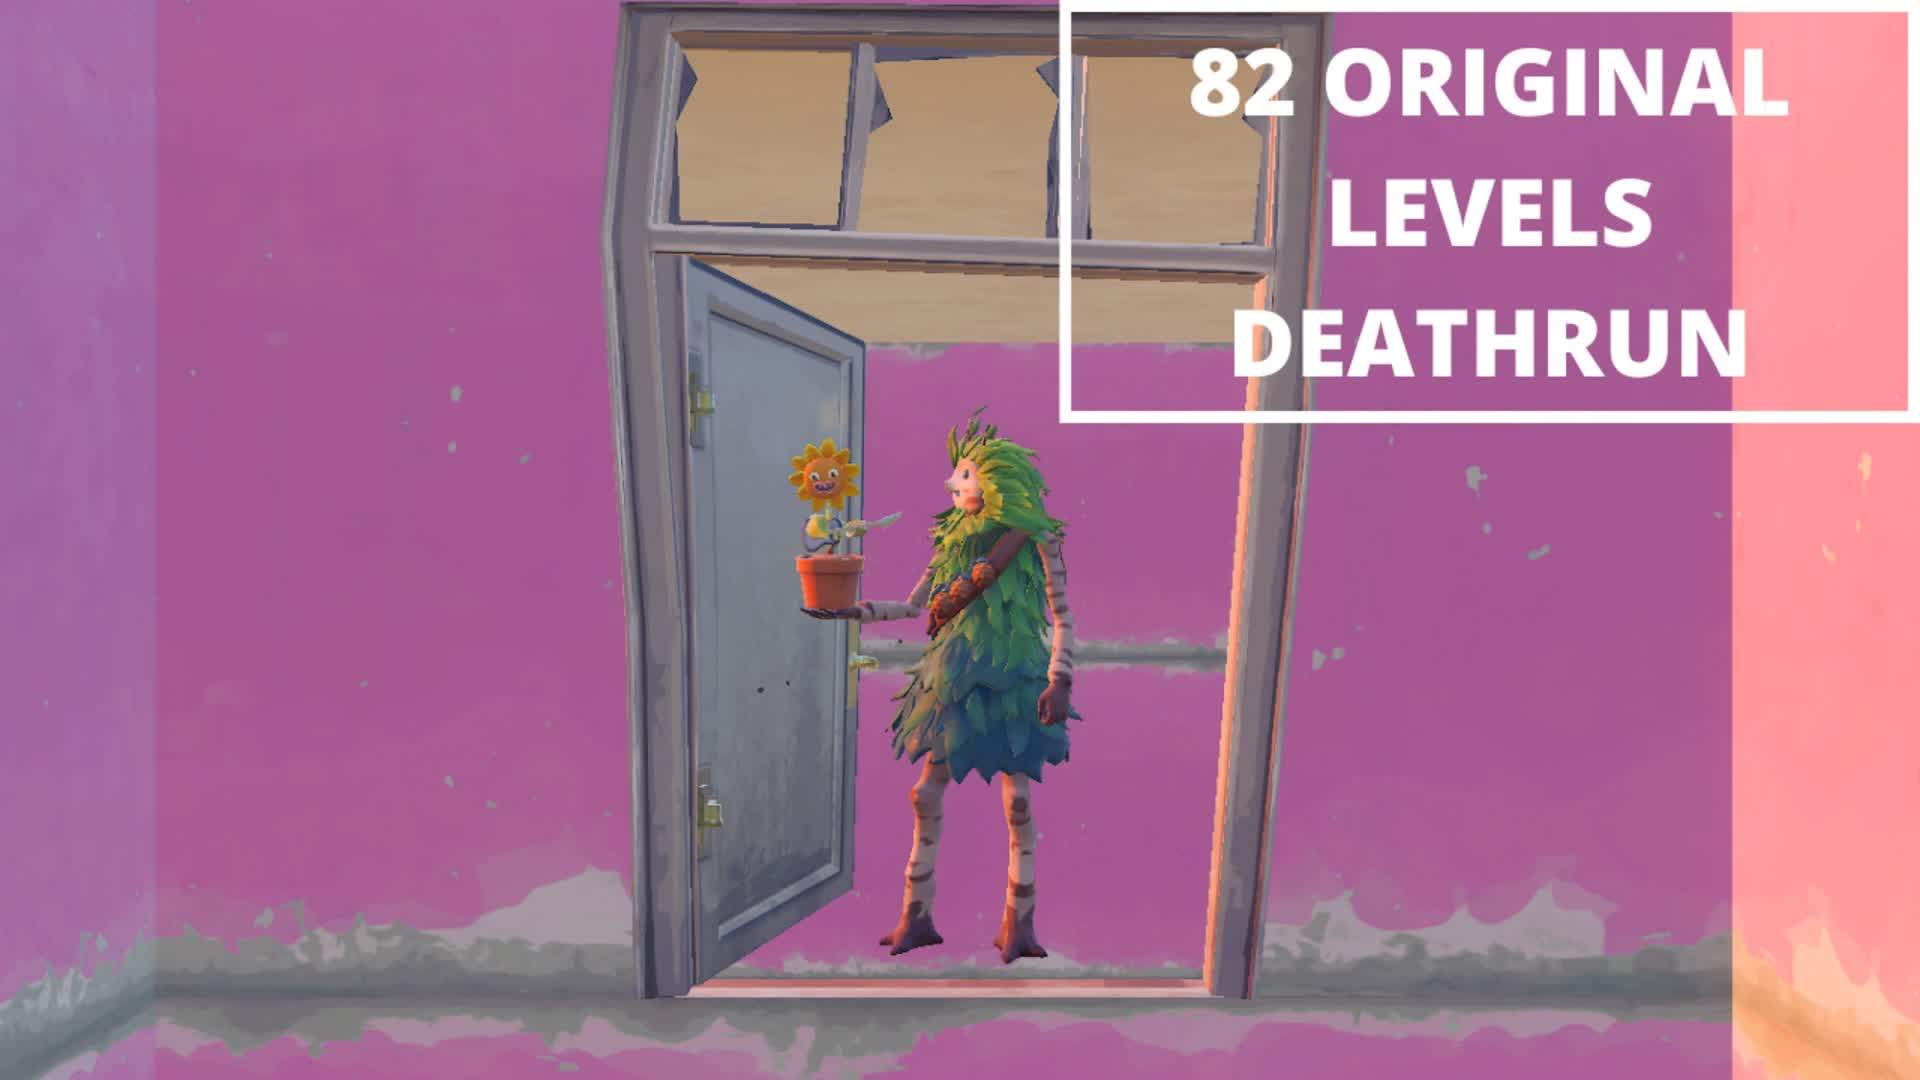 82 Original Levels Deathrun